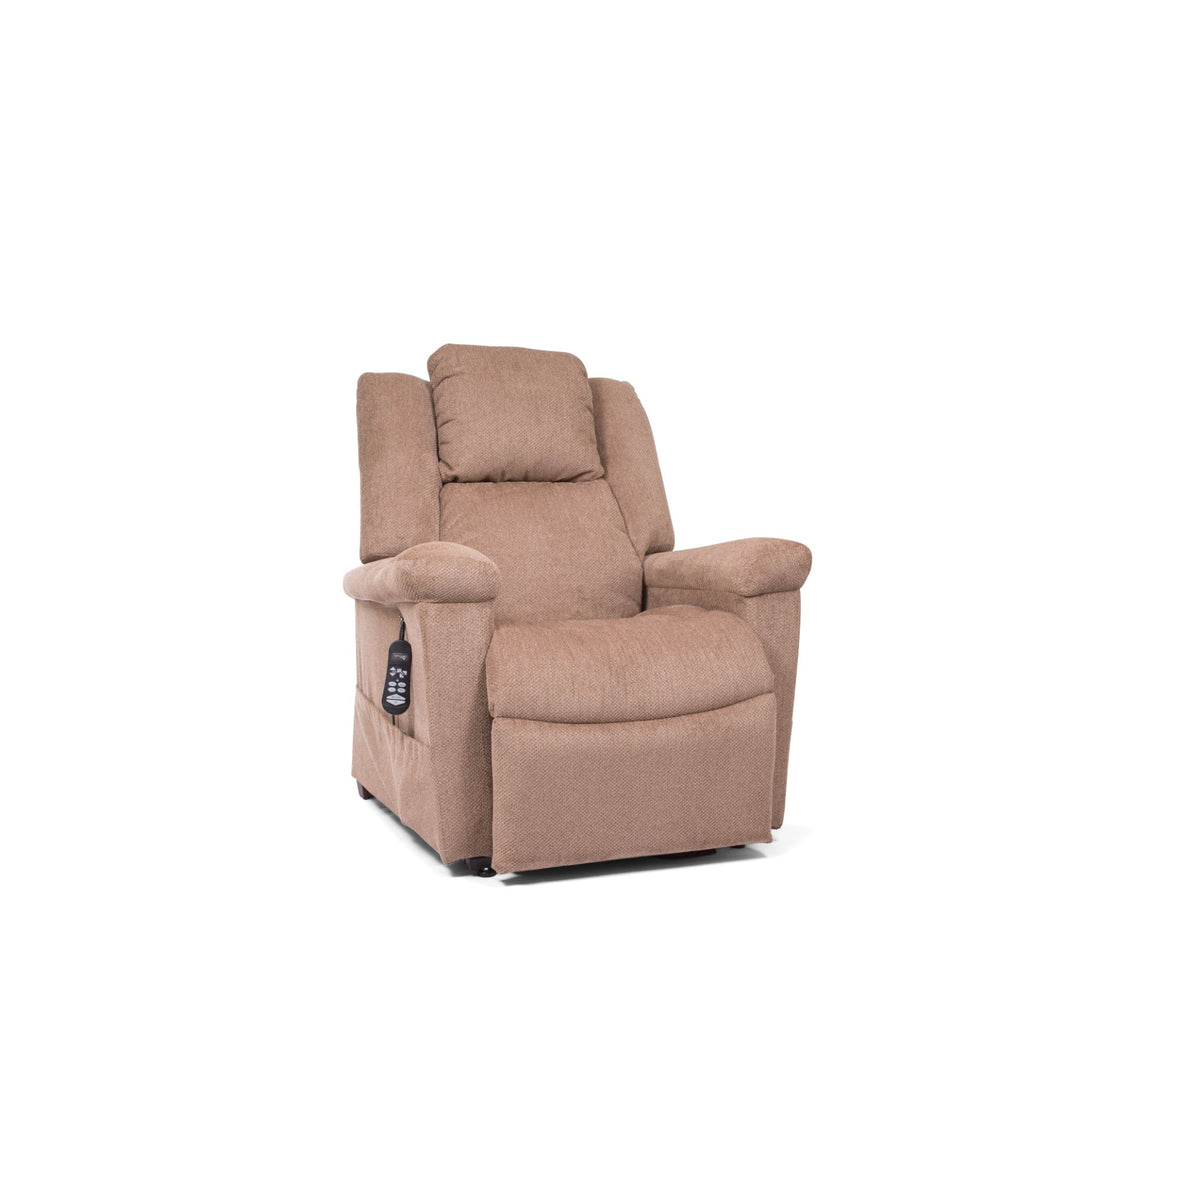 UltraComfort Estrella Power Lift Chair Recliner